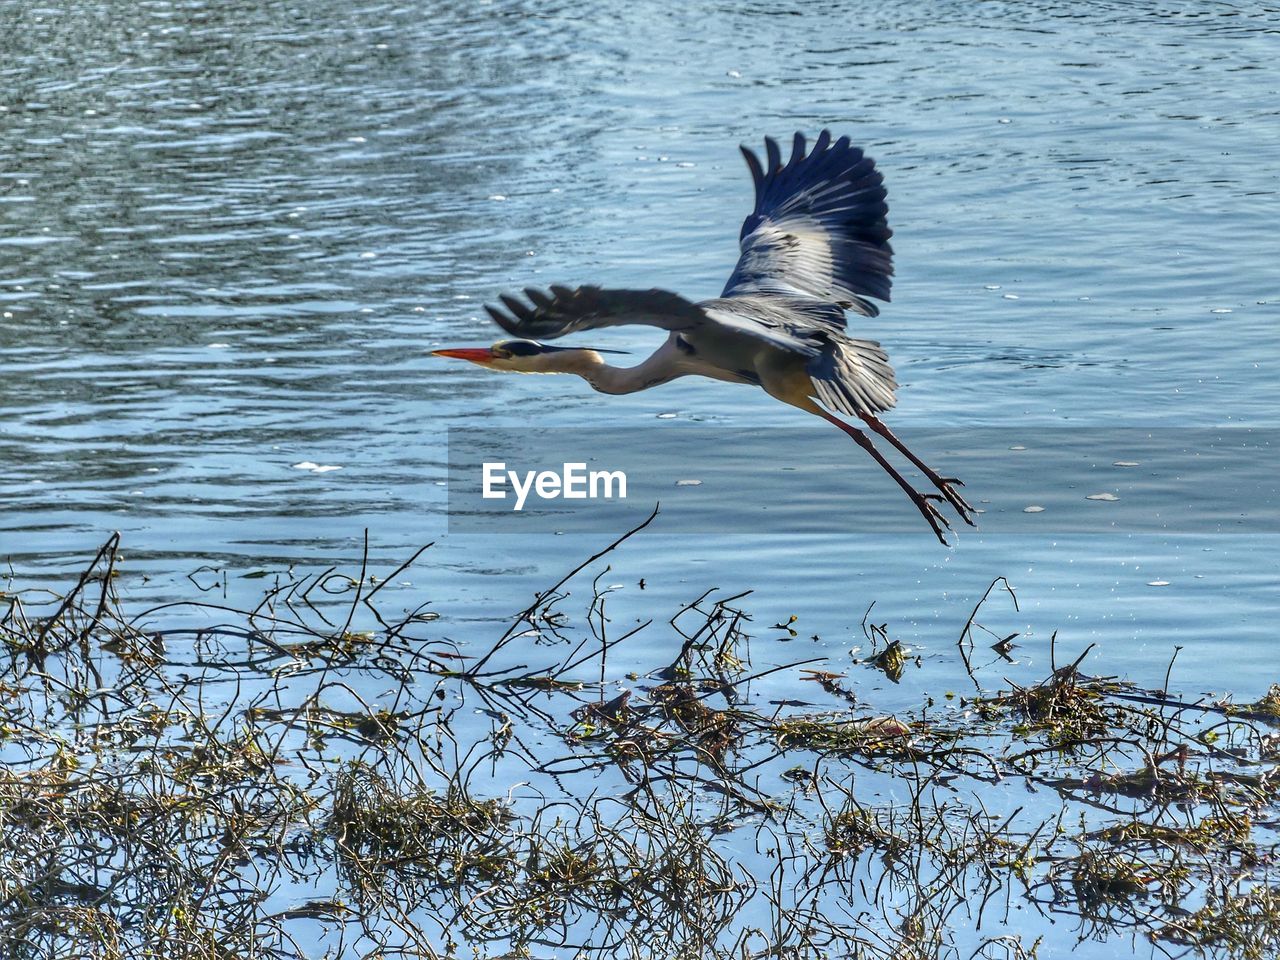 BIRD FLYING ABOVE LAKE